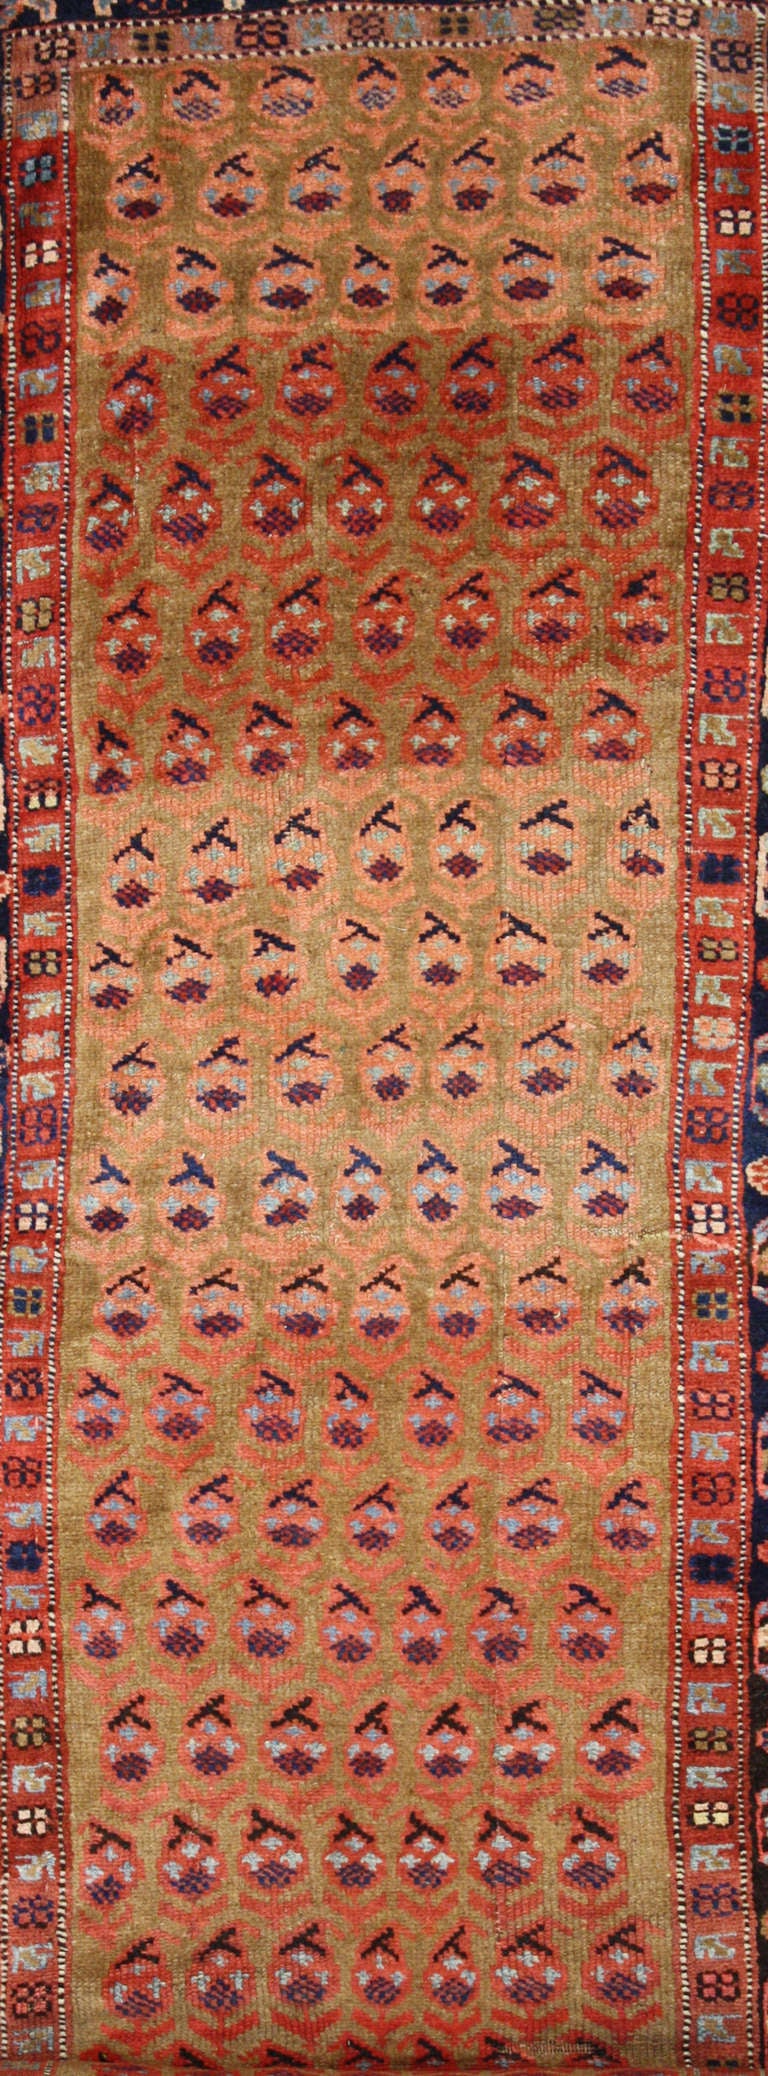 Wool Late 19th Century Antique Persian Kurd Carpet Runner, Long Persian Runner